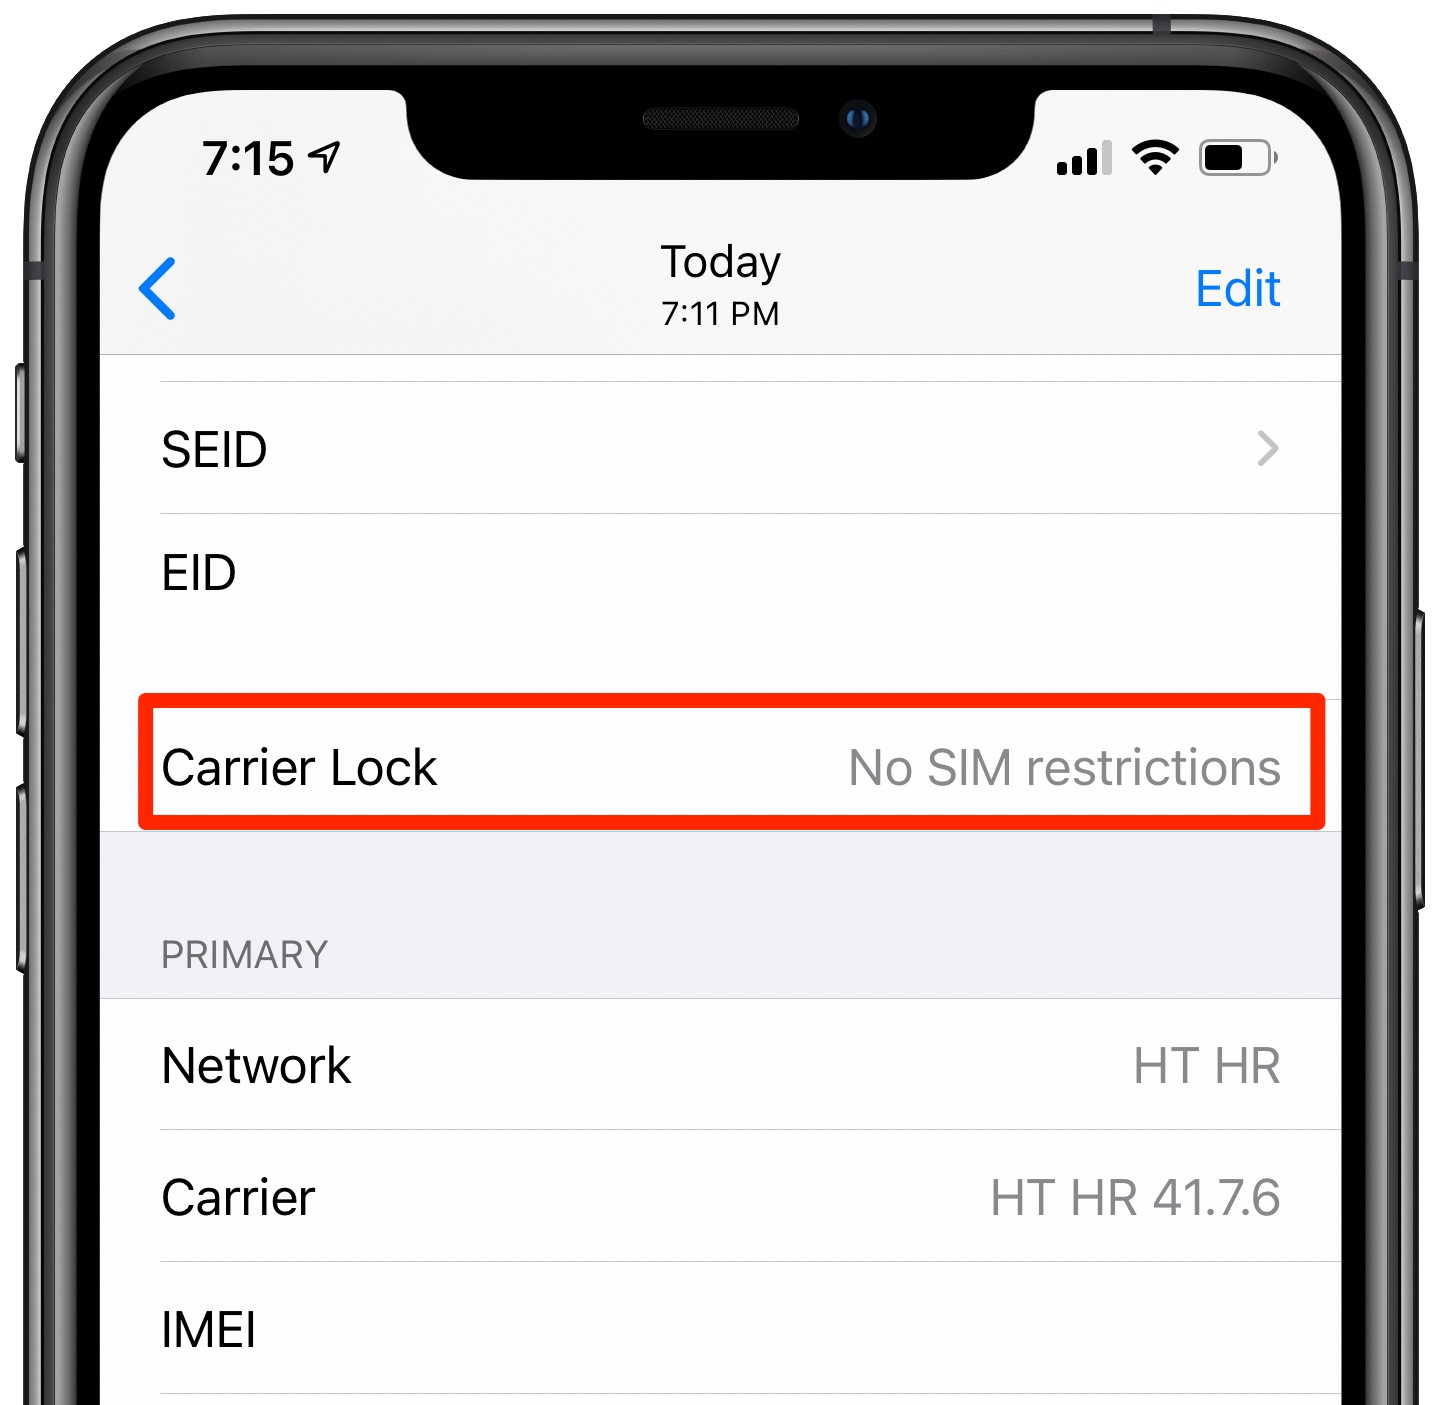 iPhone carrier lock information in iOS 14's Settings app